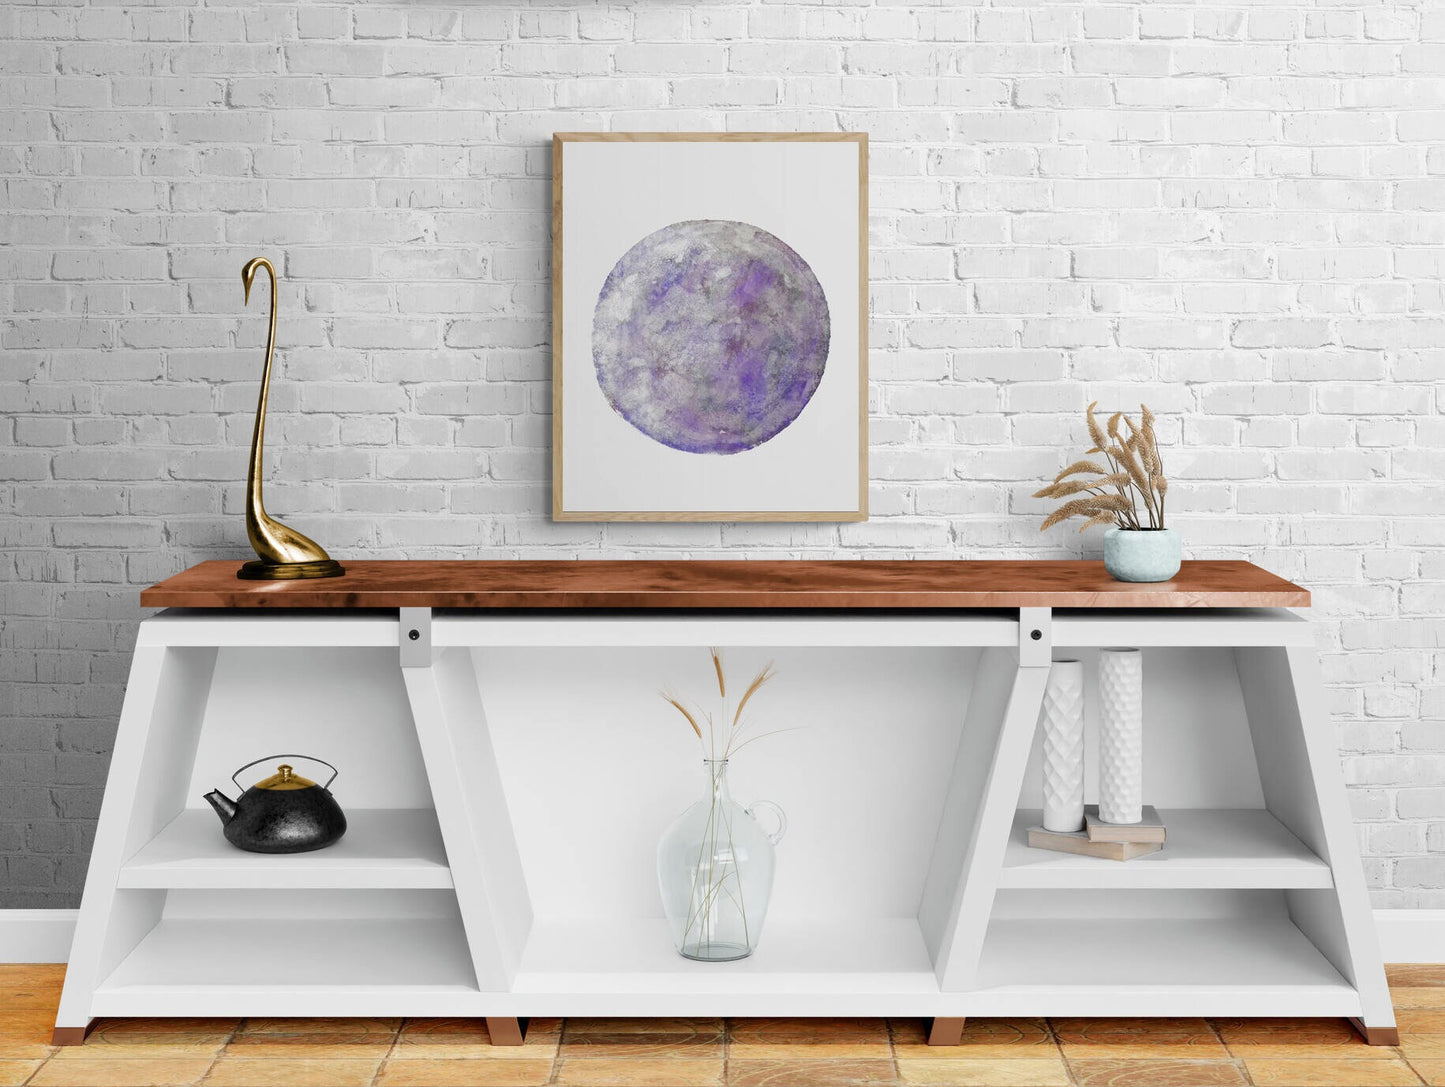 Full Moon Print, Purple Gray Moon Poster, Galaxy Artwork, Home Wall Decor, Modern Bedroom Wall Decor, Lunar phase, Space Art